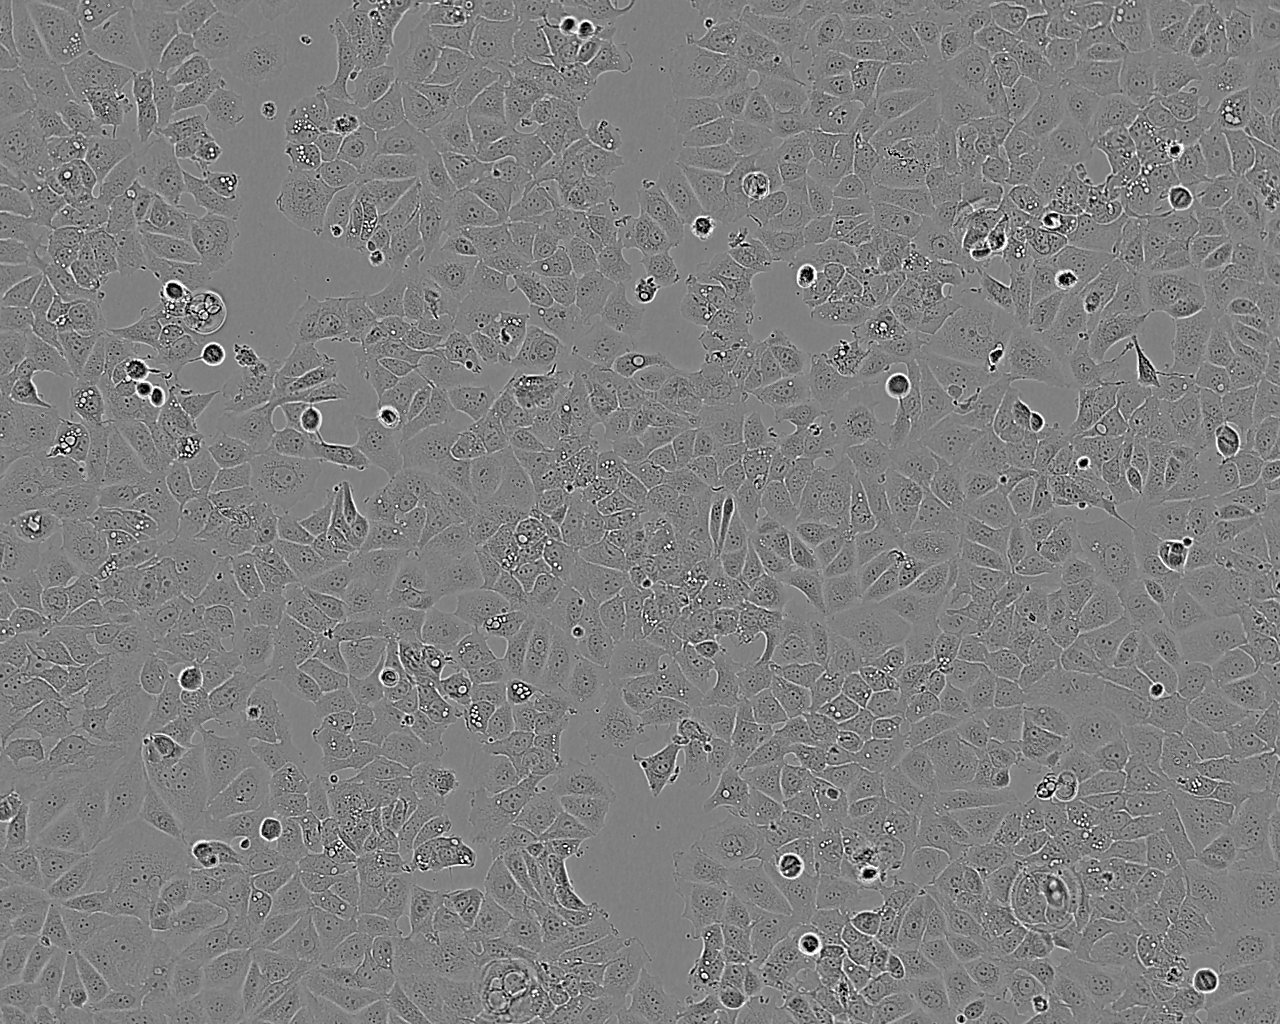 ELD-1 cell line人朗格汉斯细胞型树突状细胞系,ELD-1 cell line